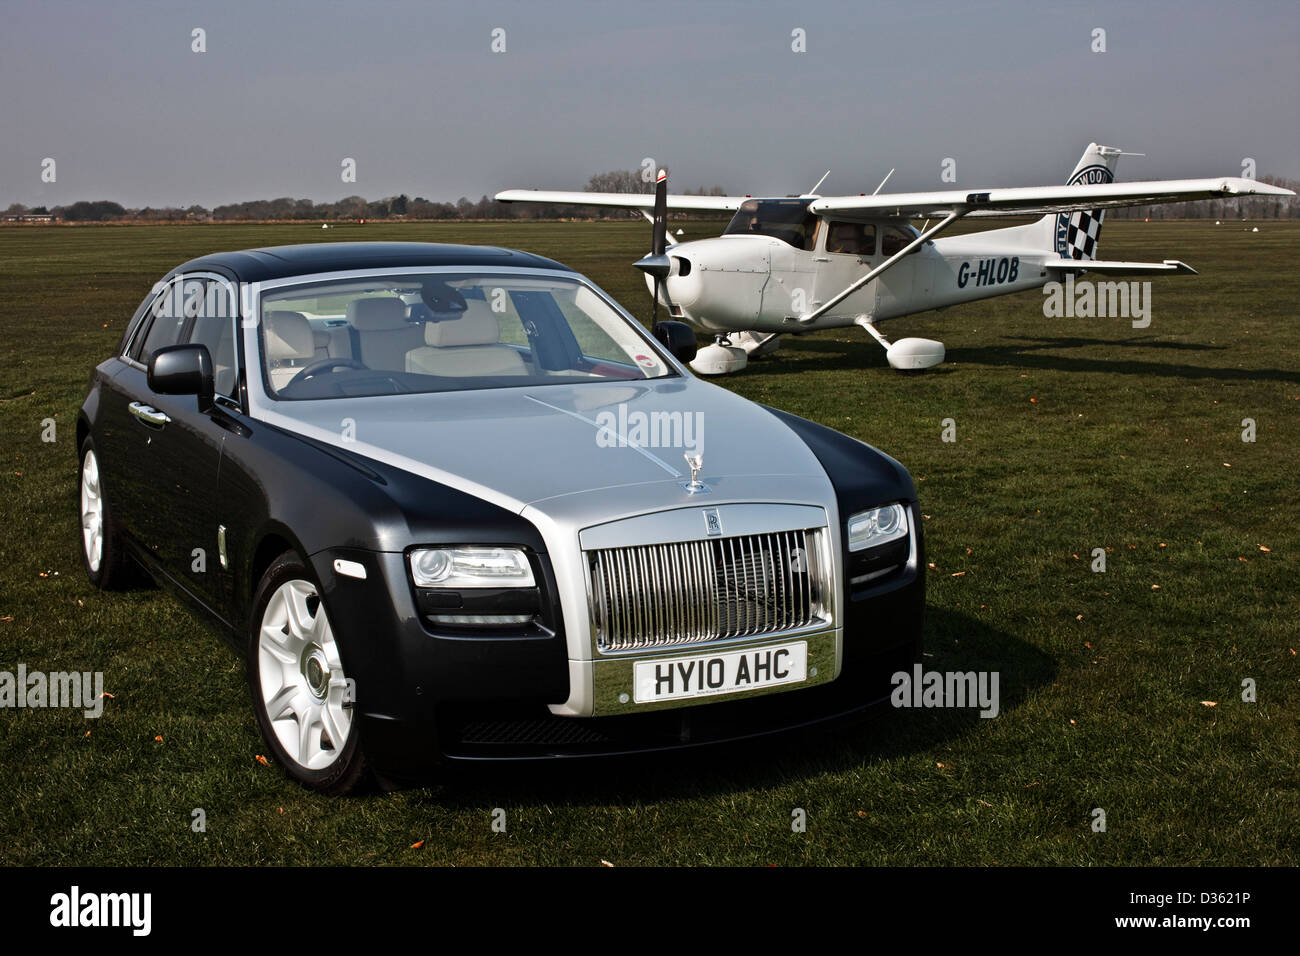 Rolls-Royce Ghost Luxus Limousine, Goodwood, UK, 15 04 2010 Stockfoto